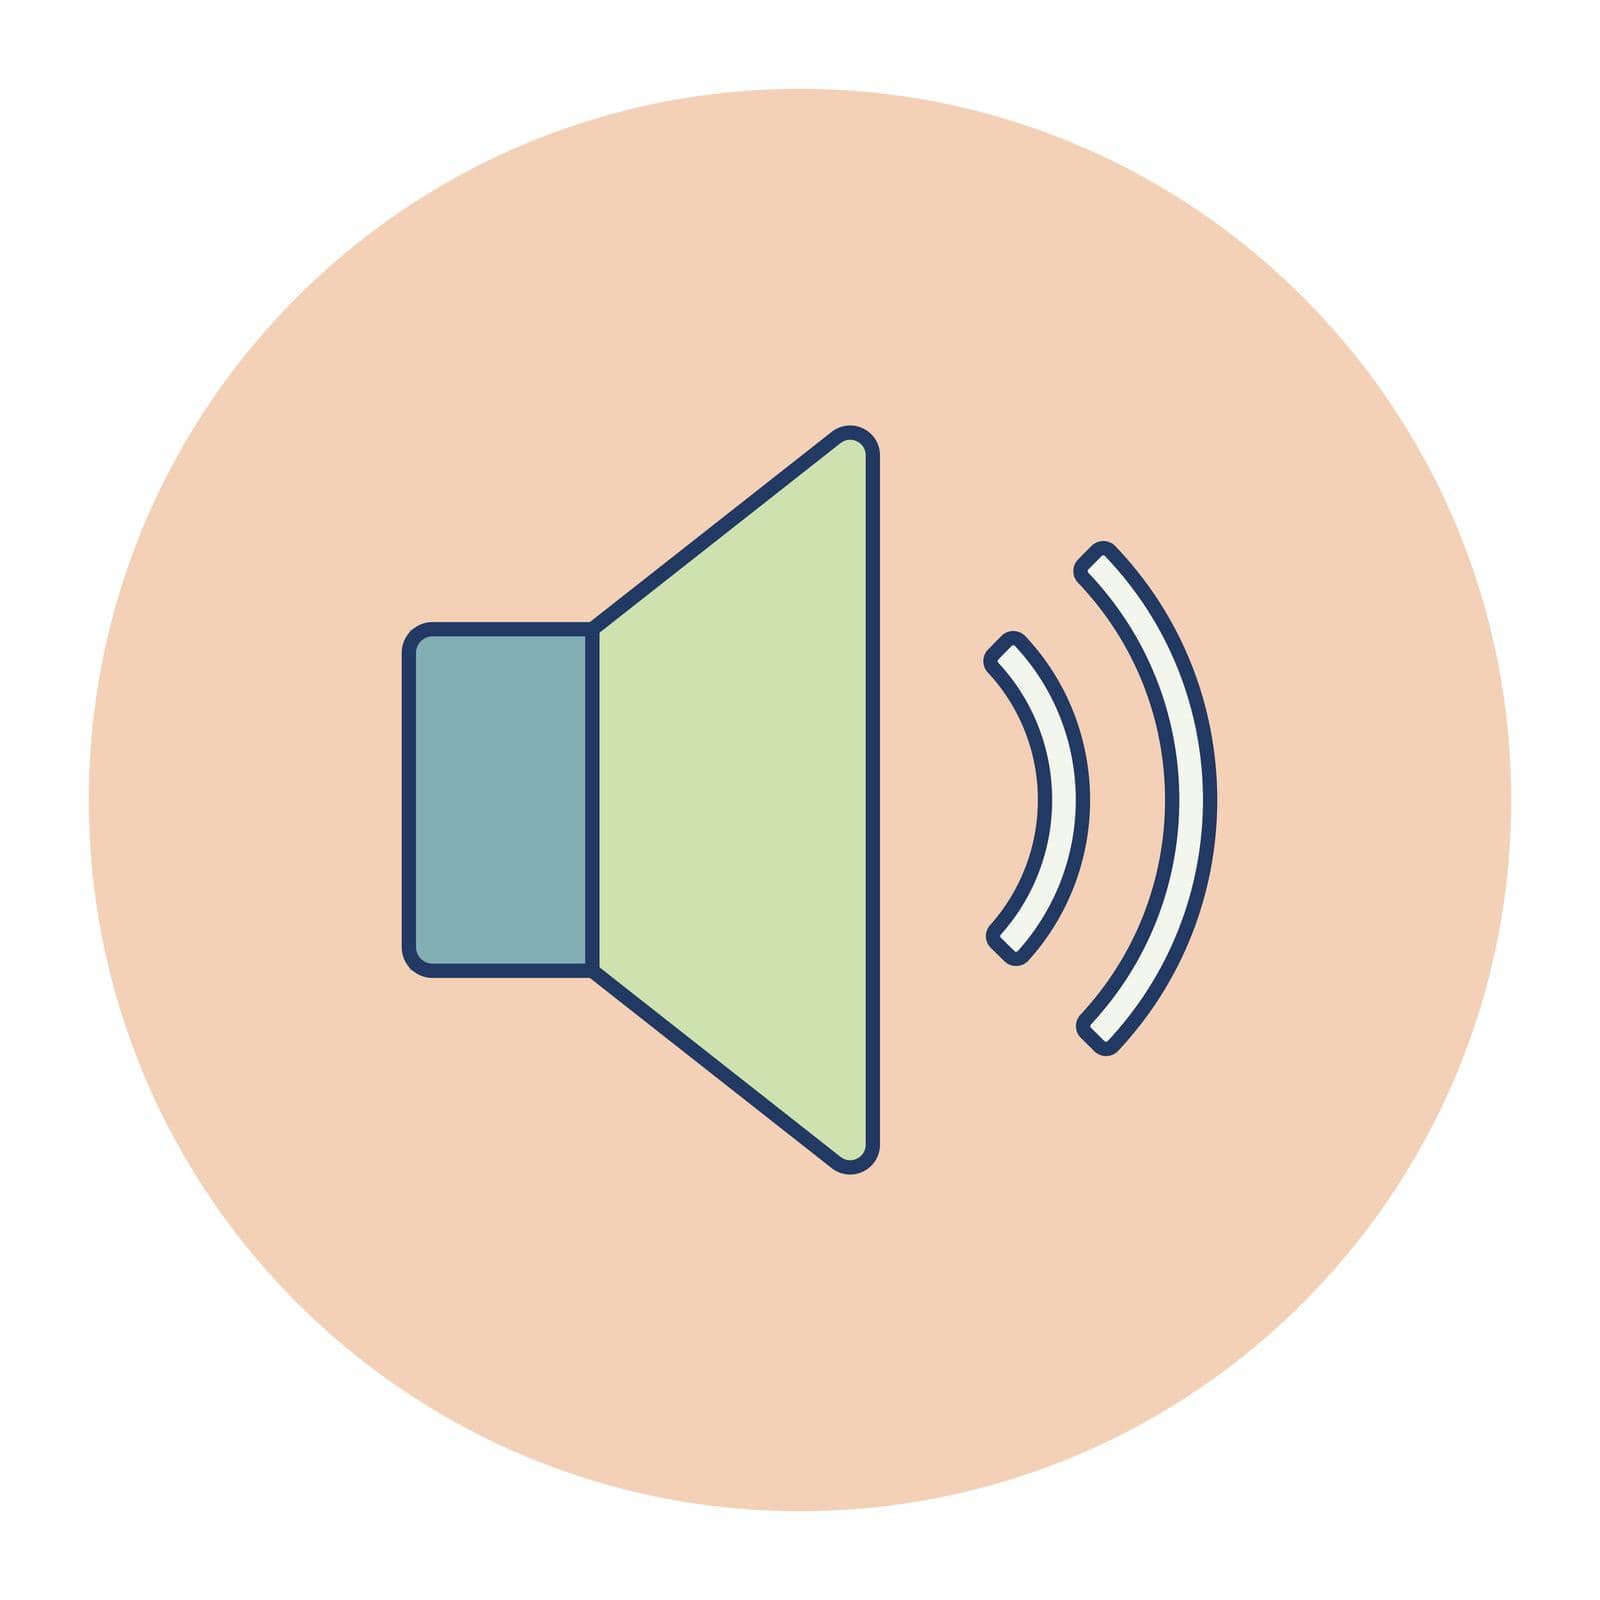 Medium volume sound music vector flat icon by nosik